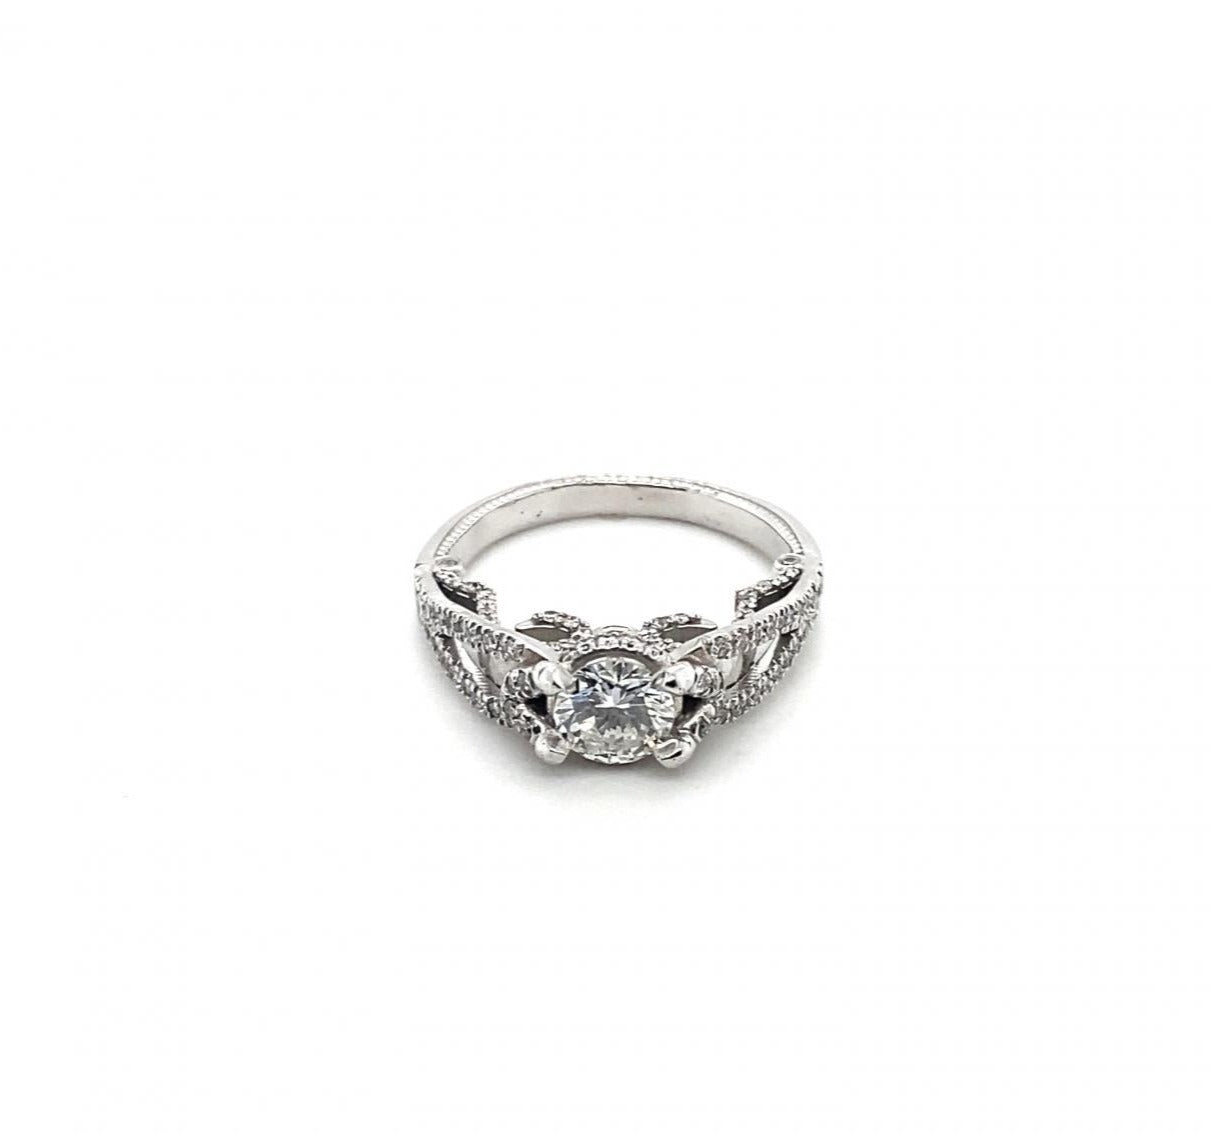 1.00 Carat Round Brilliant Cut Diamond Engagement Ring 18K White Gold Fancy Mounting